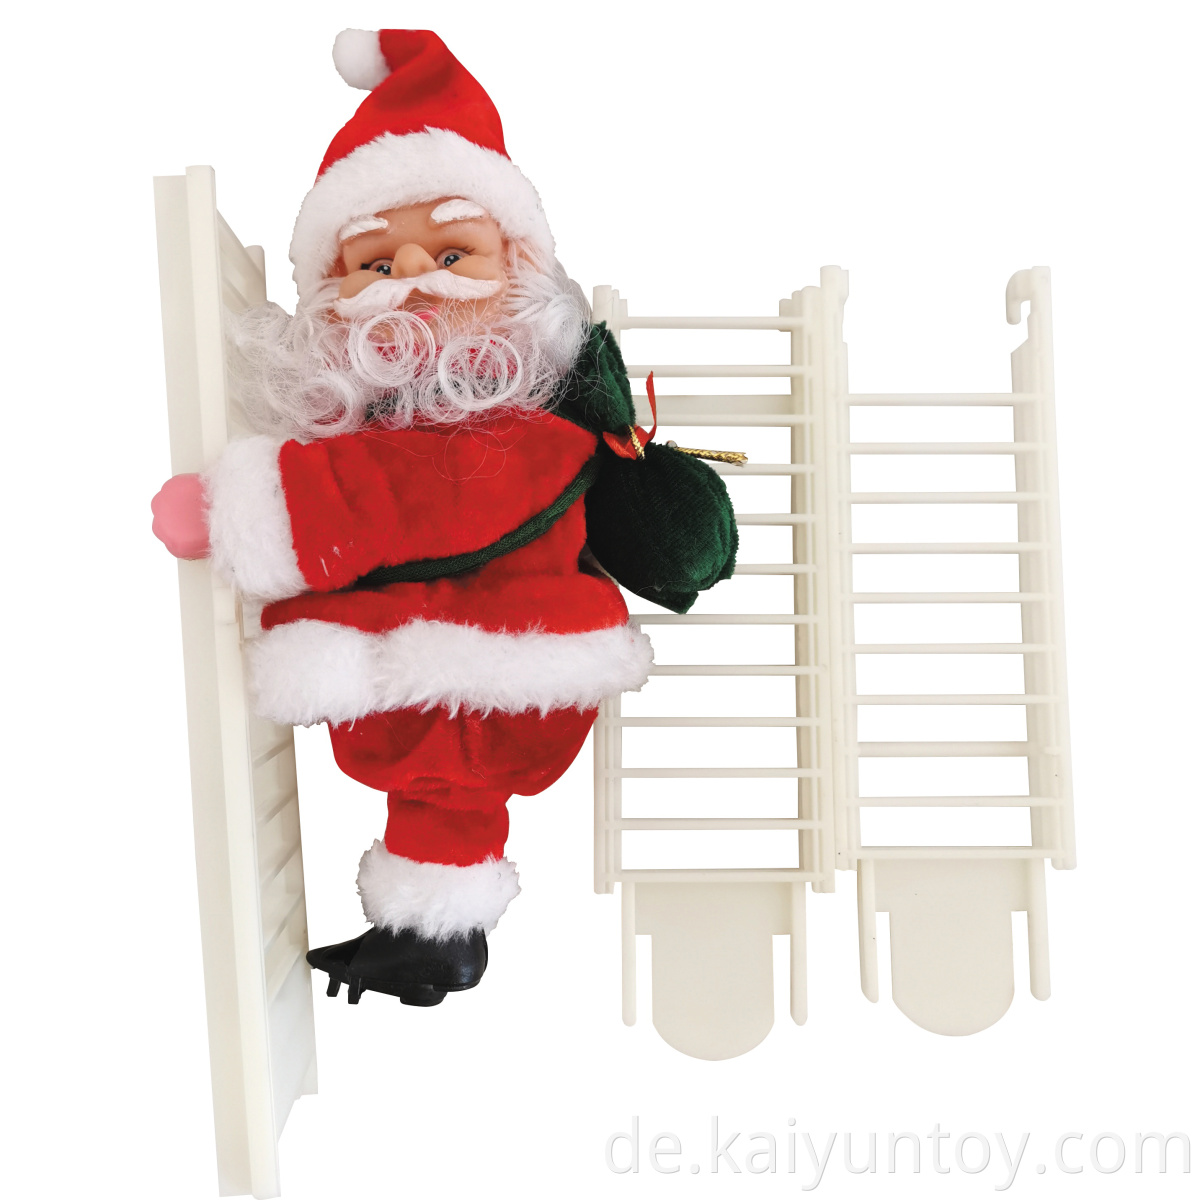 Climbing Ladder Santa Claus